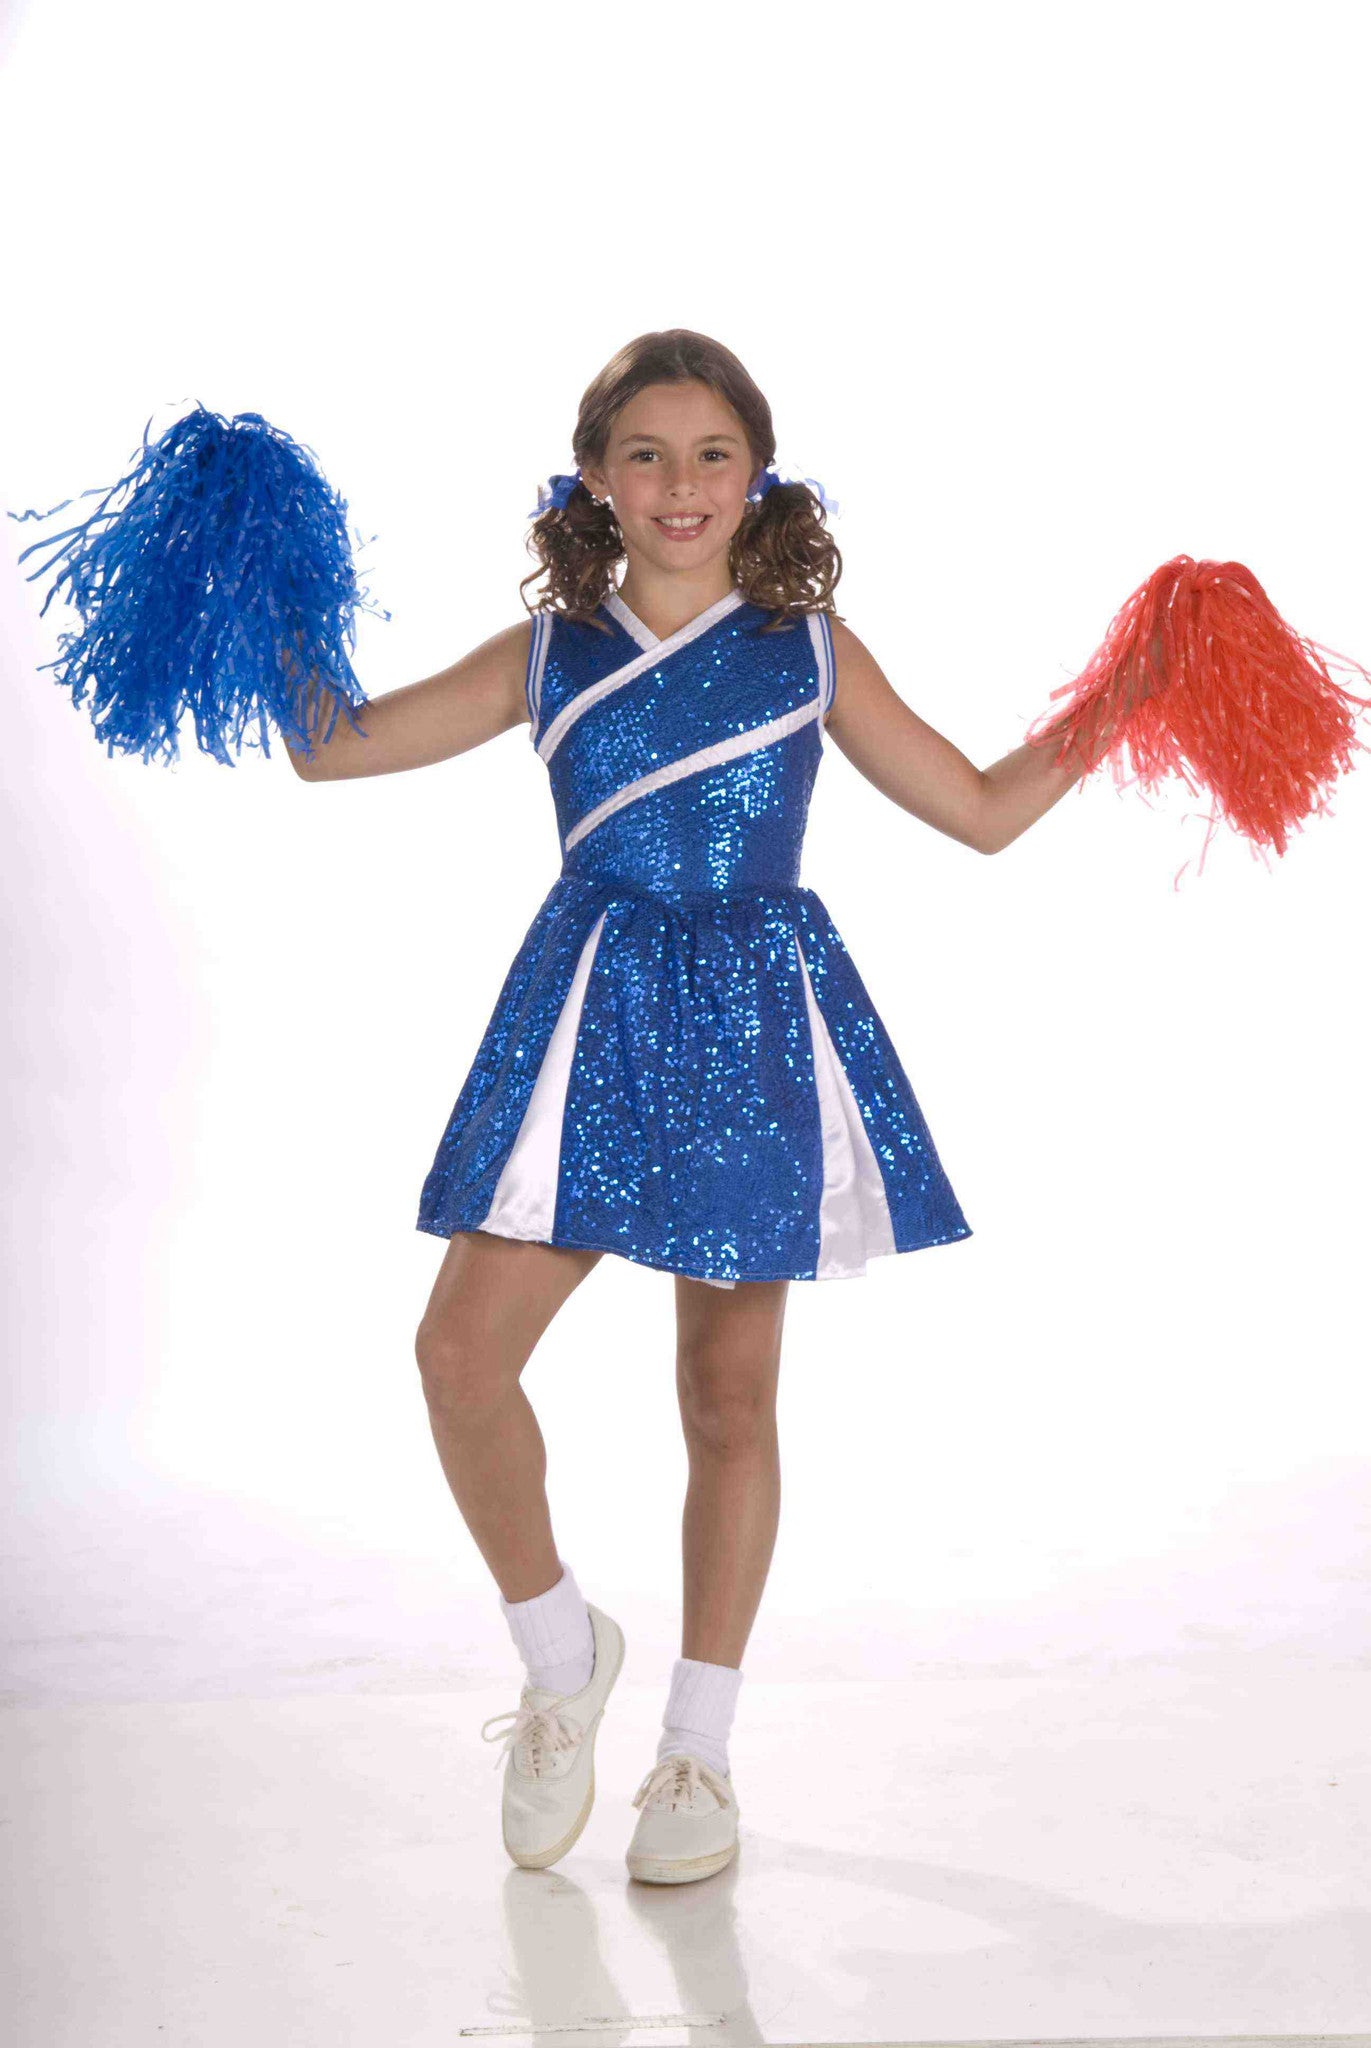 Bring It Cheerleader Costume for Girls